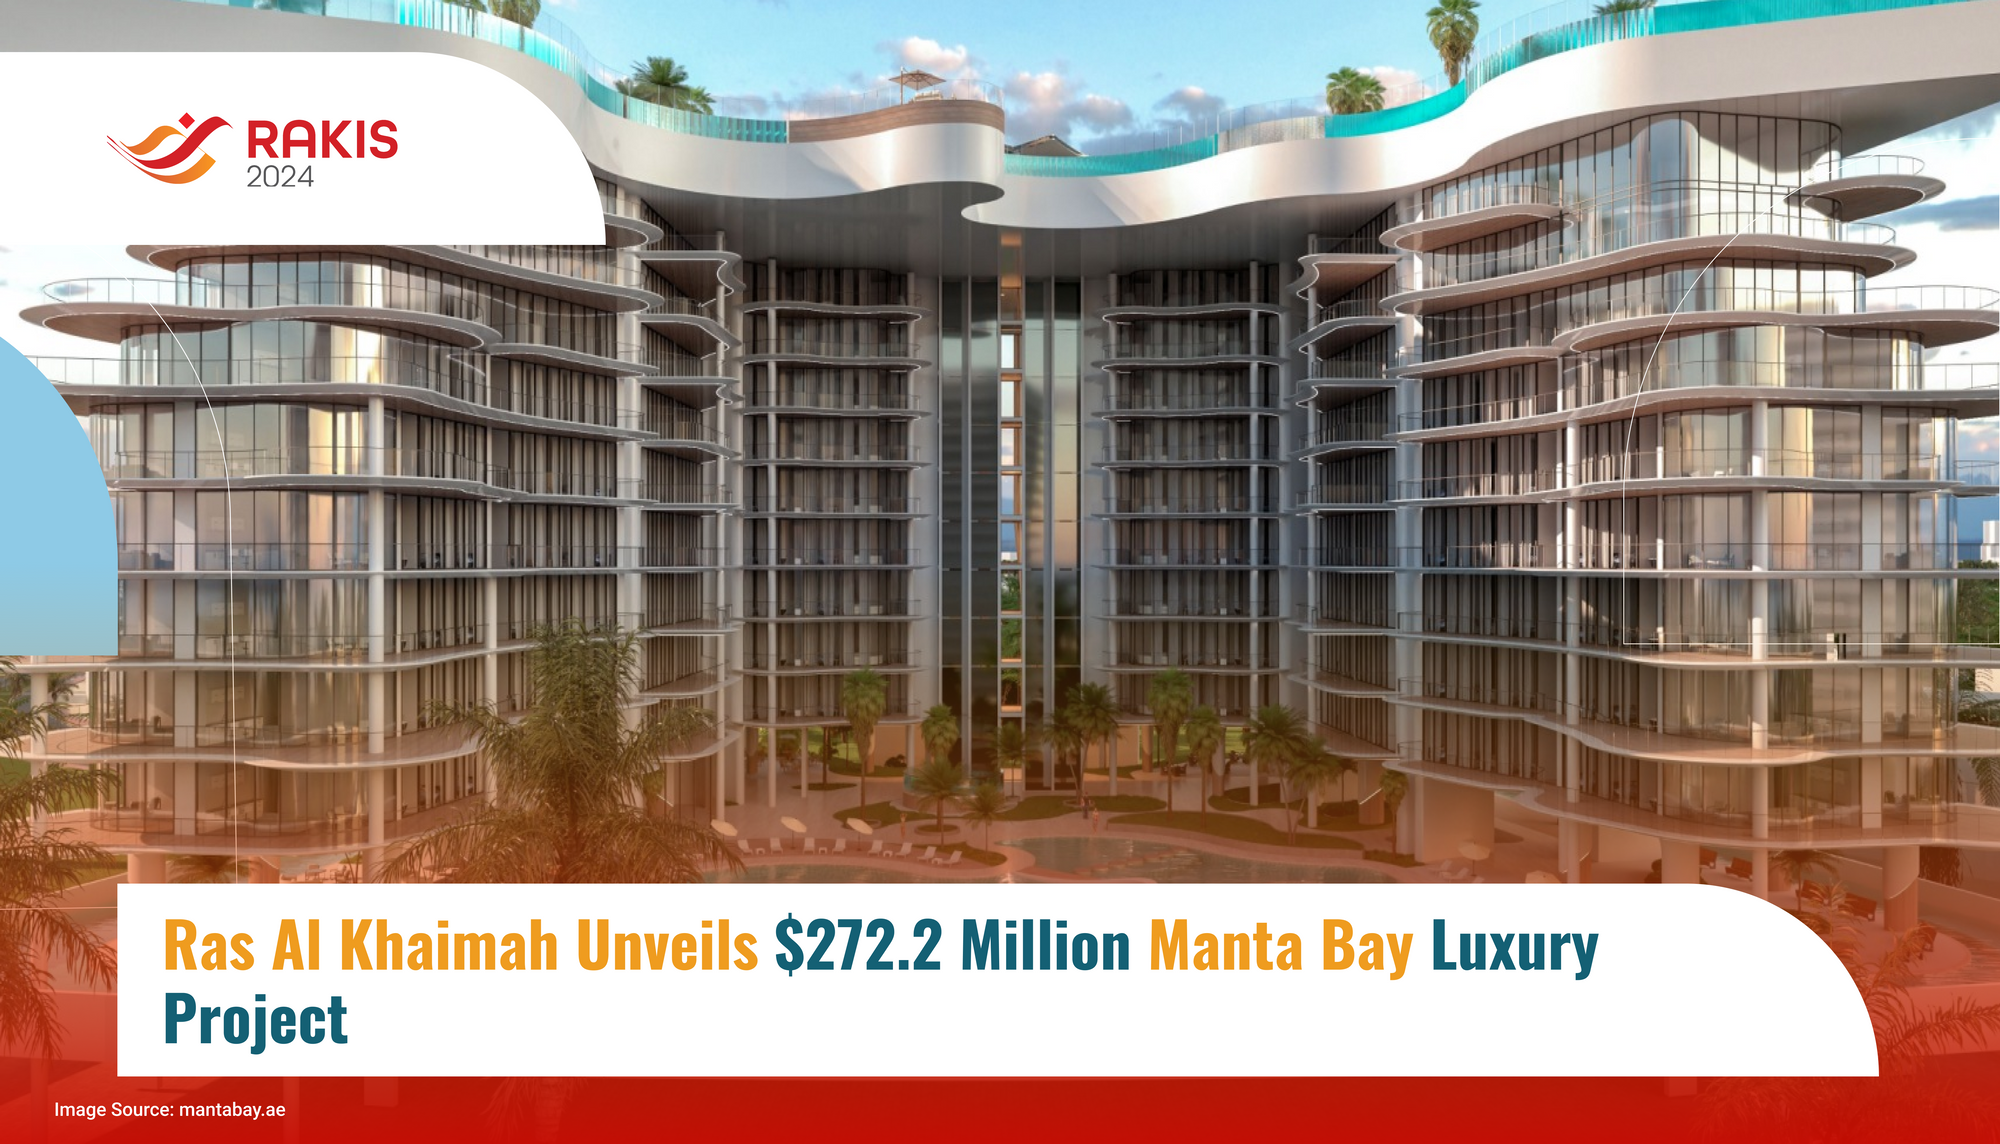 Ras Al Khaimah Unveils $272.2 Million Manta Bay Luxury Project